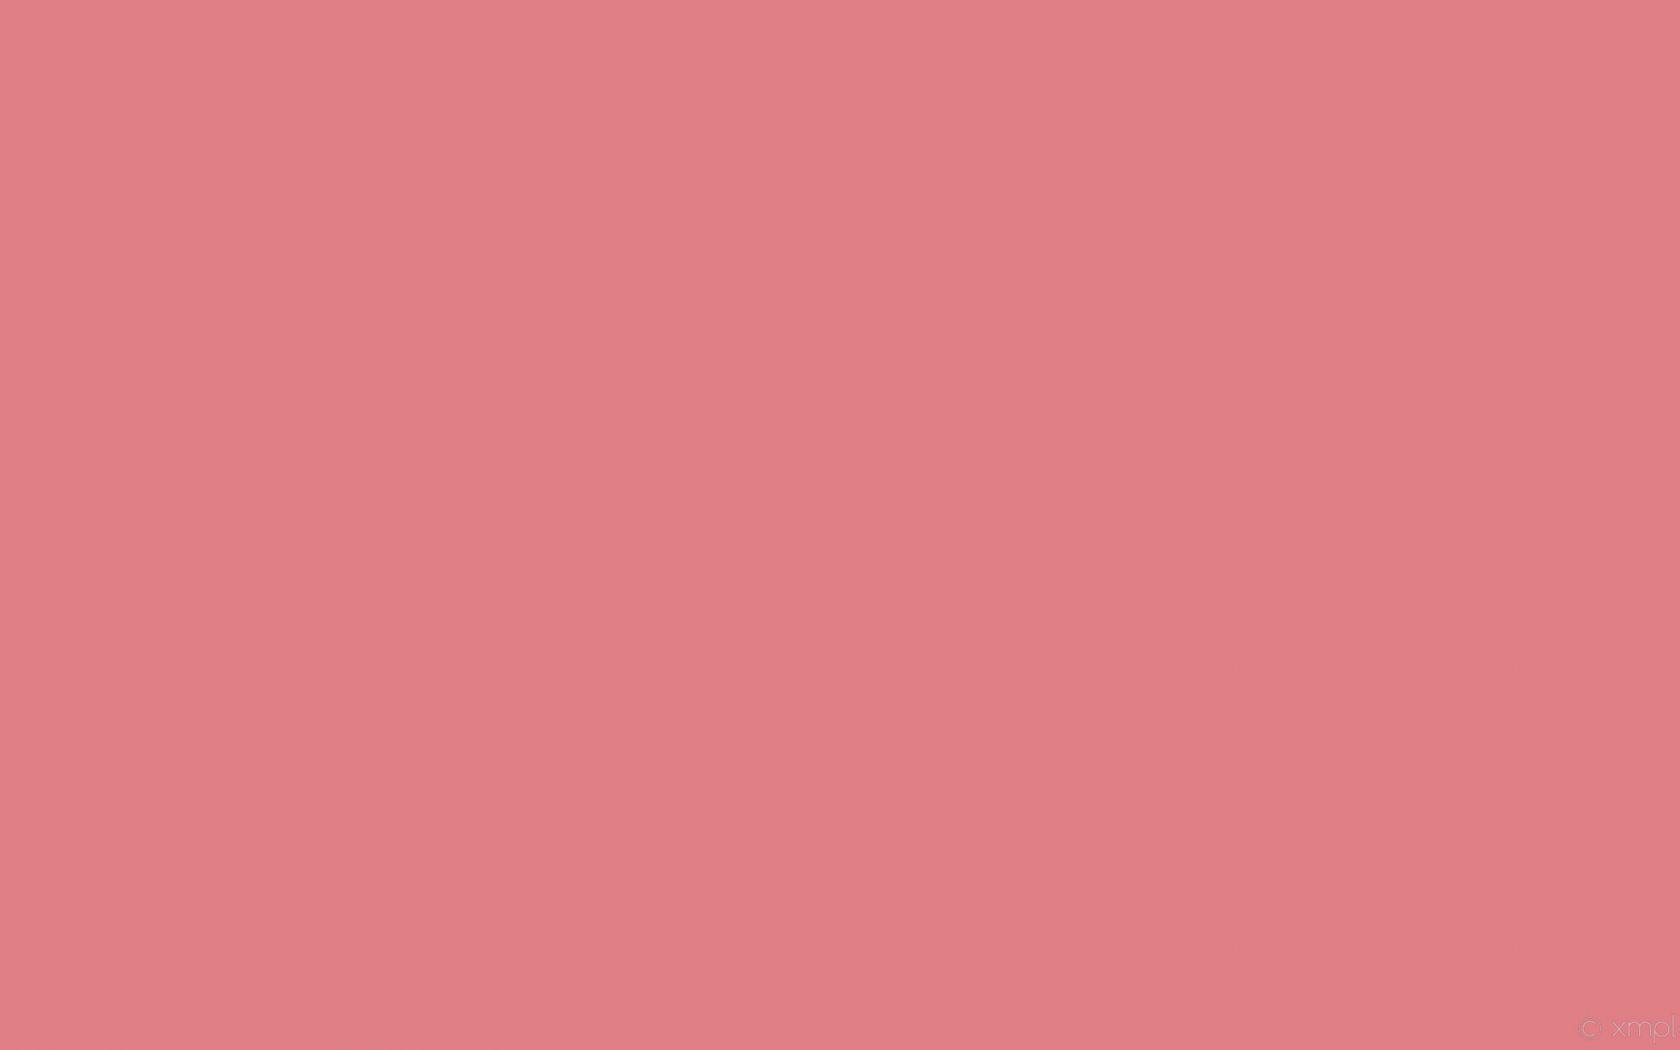 Simple Plain Pink Background Wallpaper Paperpull Image